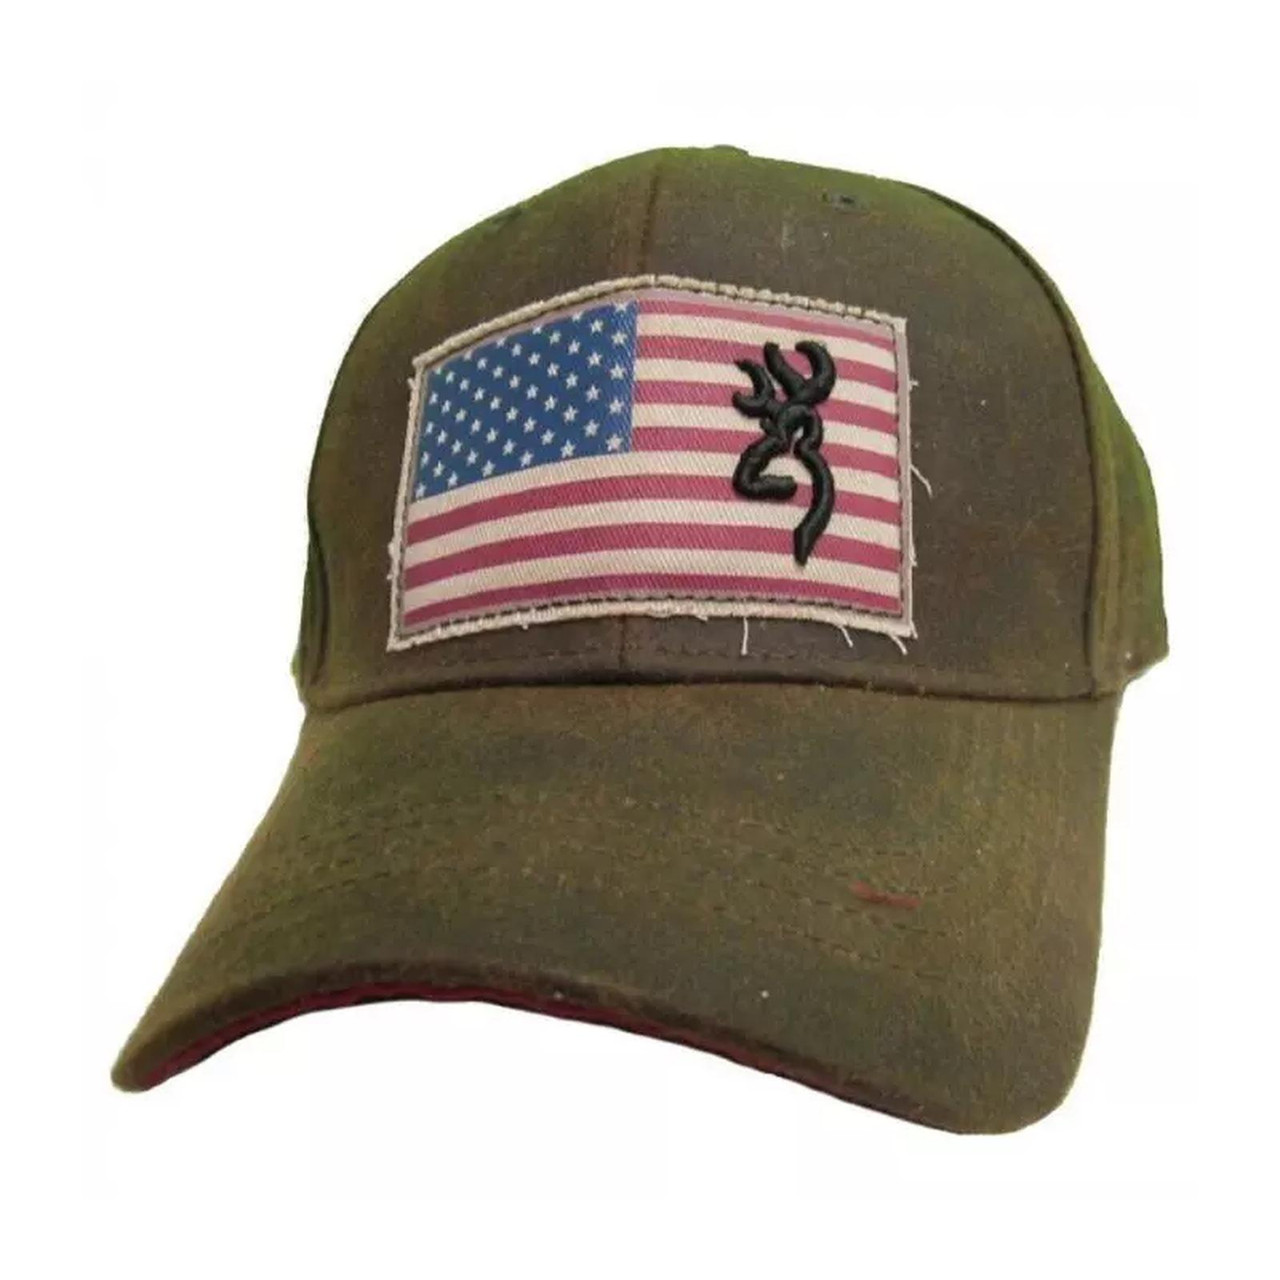 Patriot Camo Cap - Casual Hat - Browning